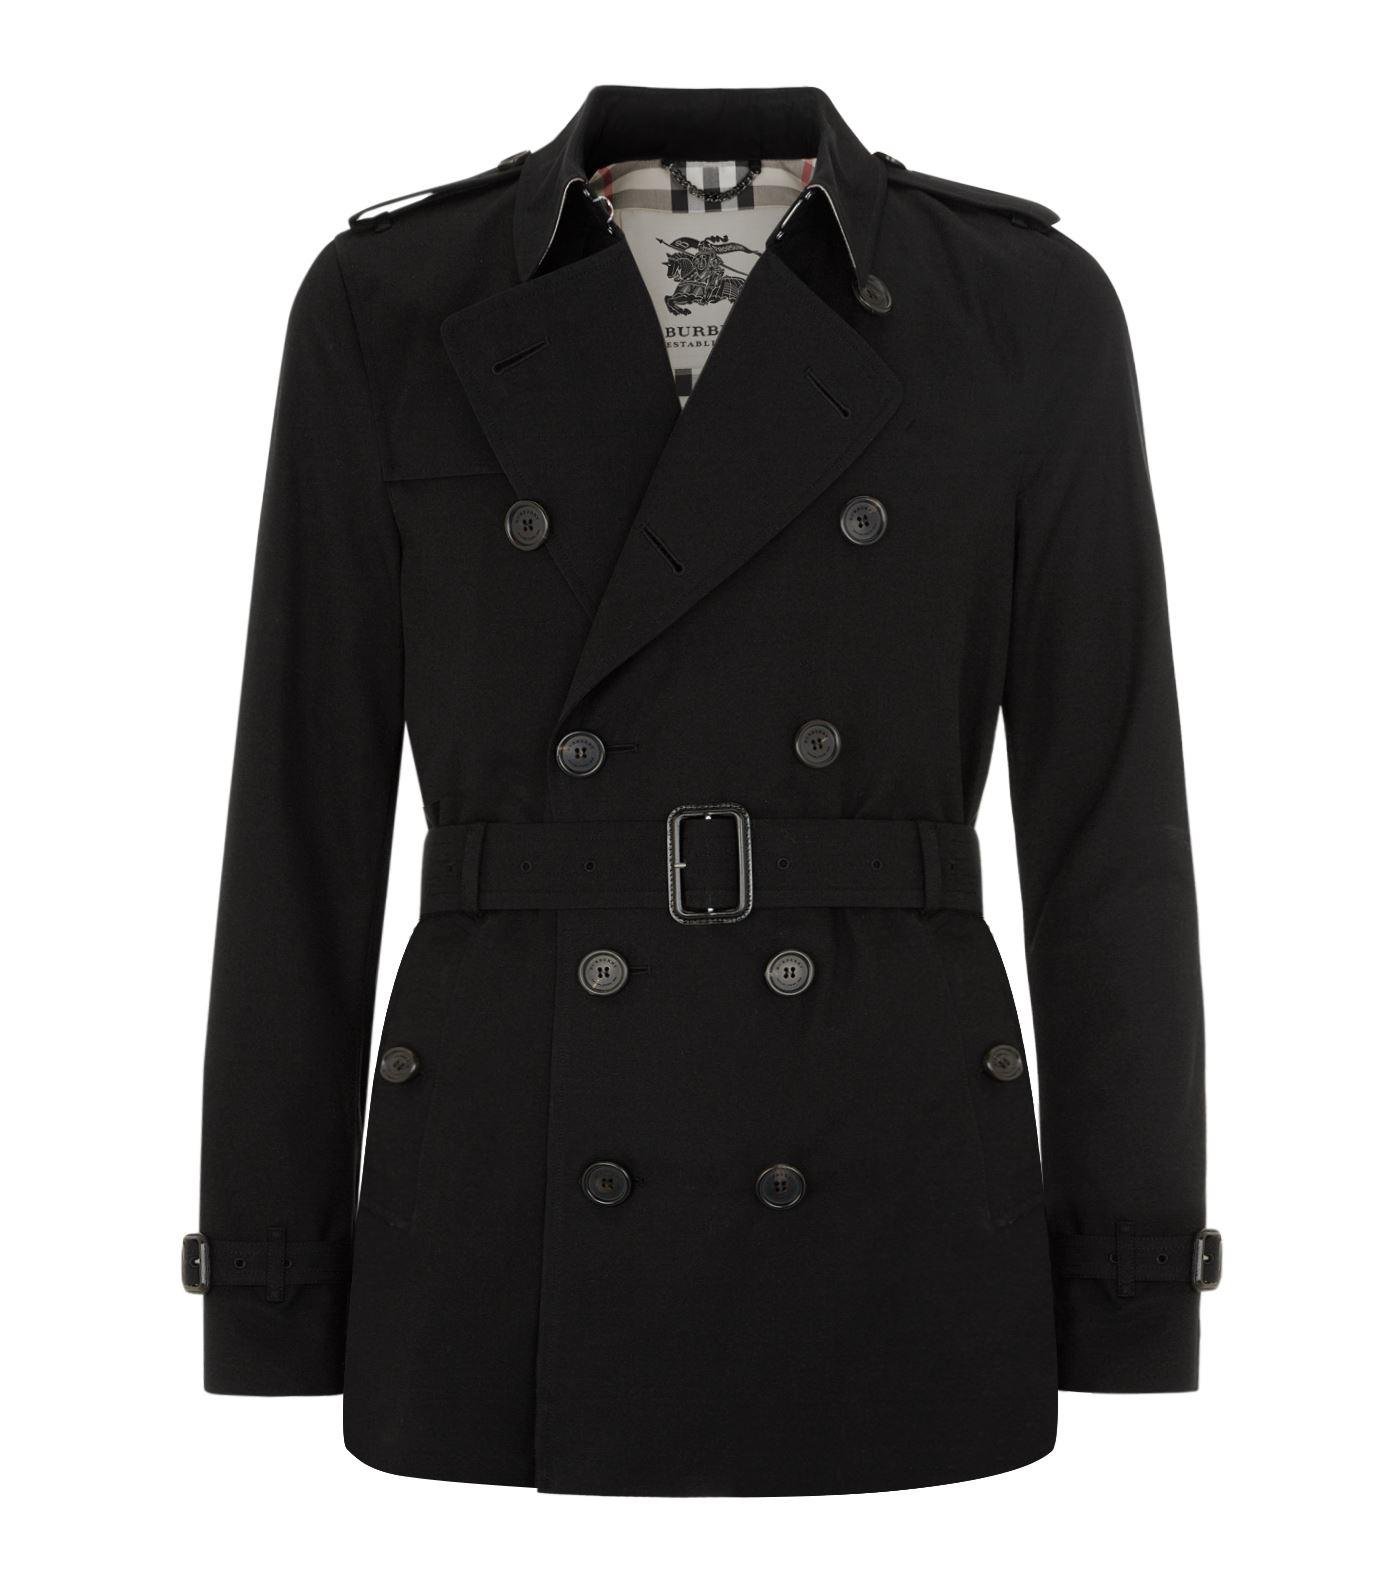 Lyst - Burberry Kensington Short Heritage Trench Coat in Black for Men ...